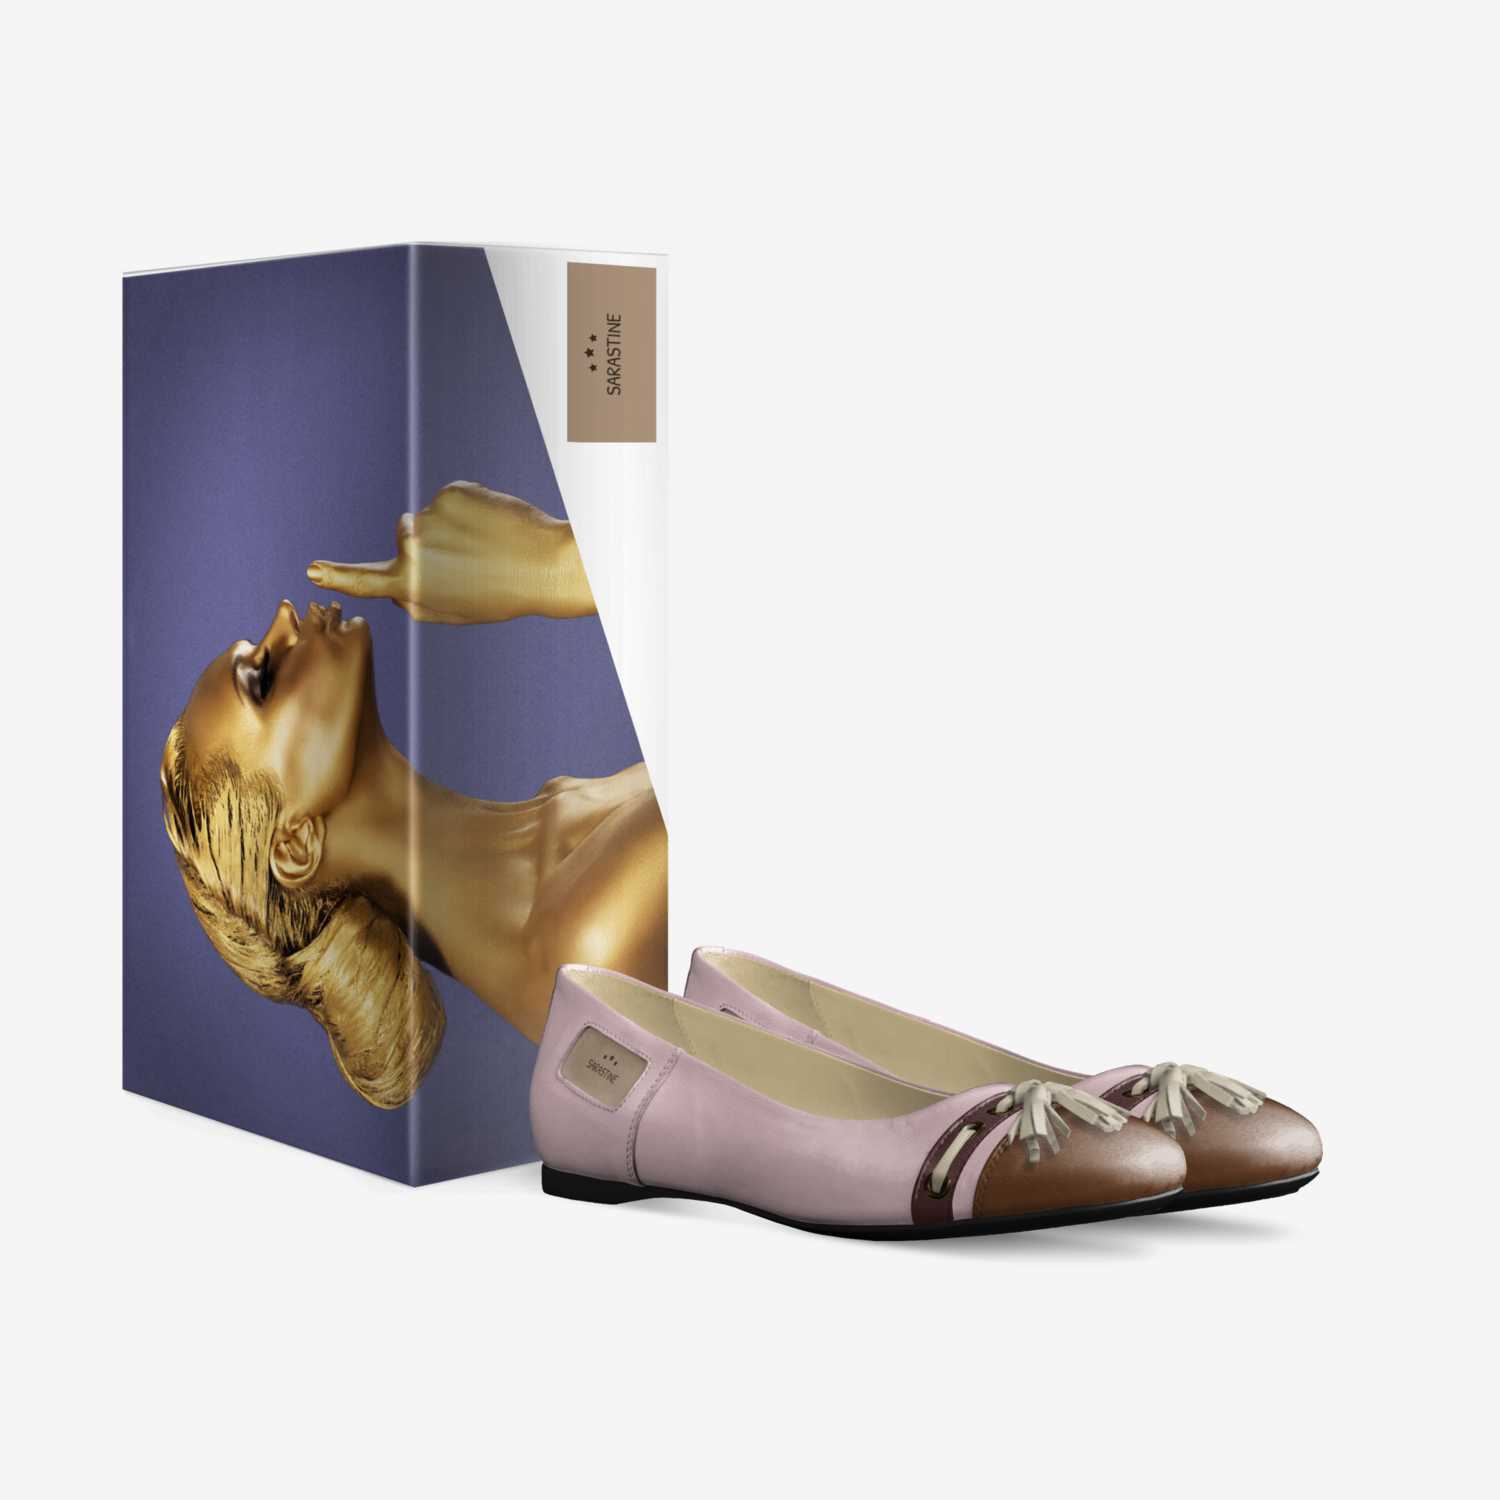 Sarastine custom made in Italy shoes by Sarastine Richey | Box view